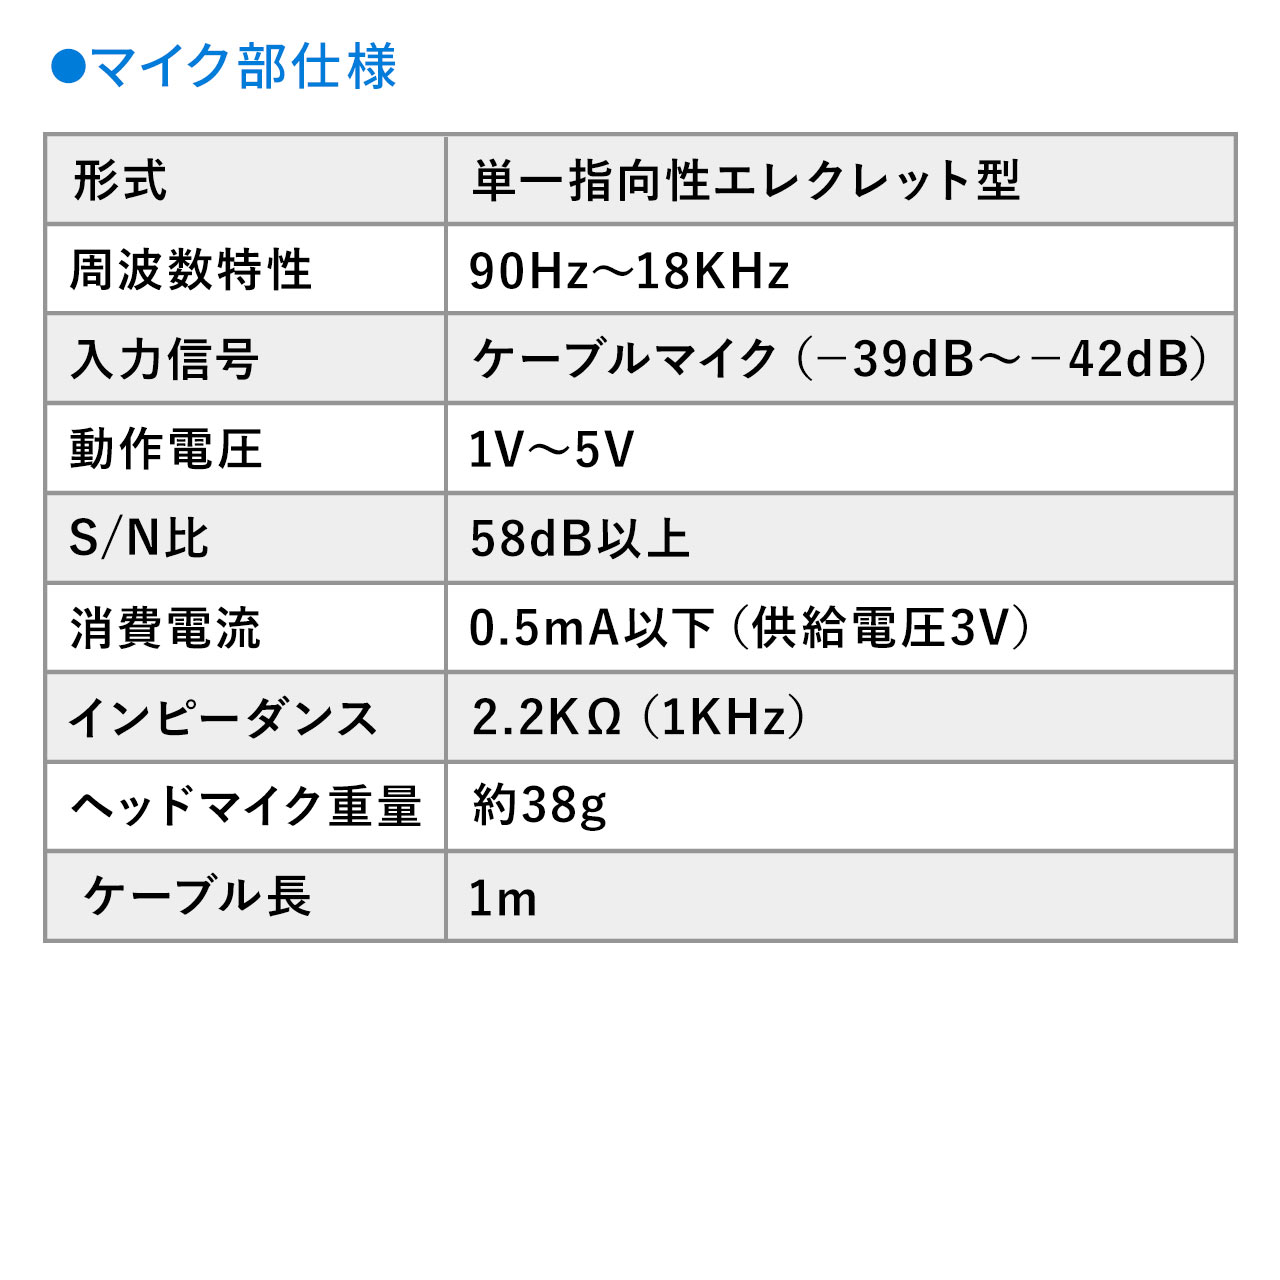 |[^ug nYt[ wbh}CNt 10Wo  USB[ microSD yĐ Cxg X̔ I 400-SP065